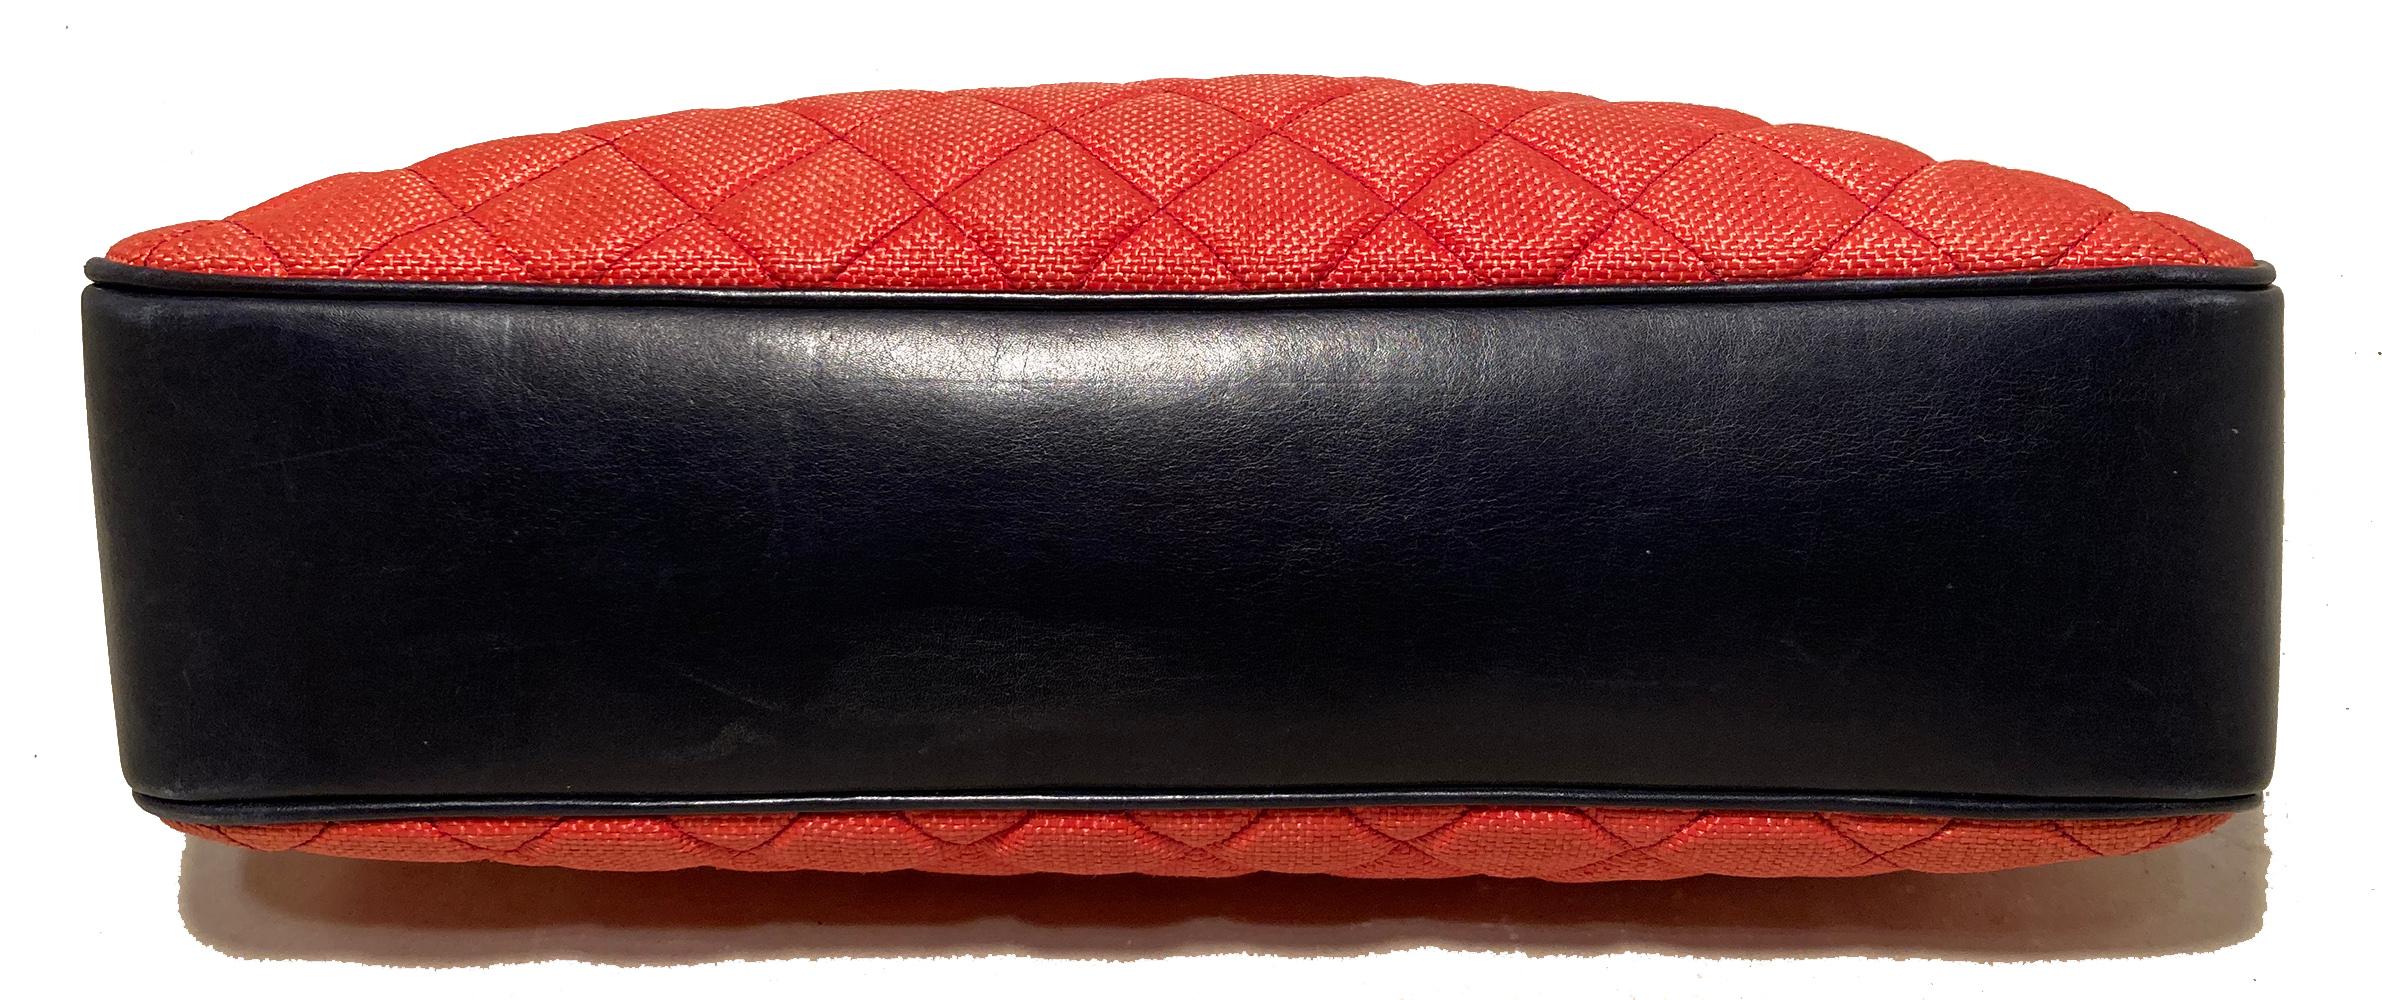 Vintage Chanel Woven Raffia and Leather Shoulder Bag Tote 1